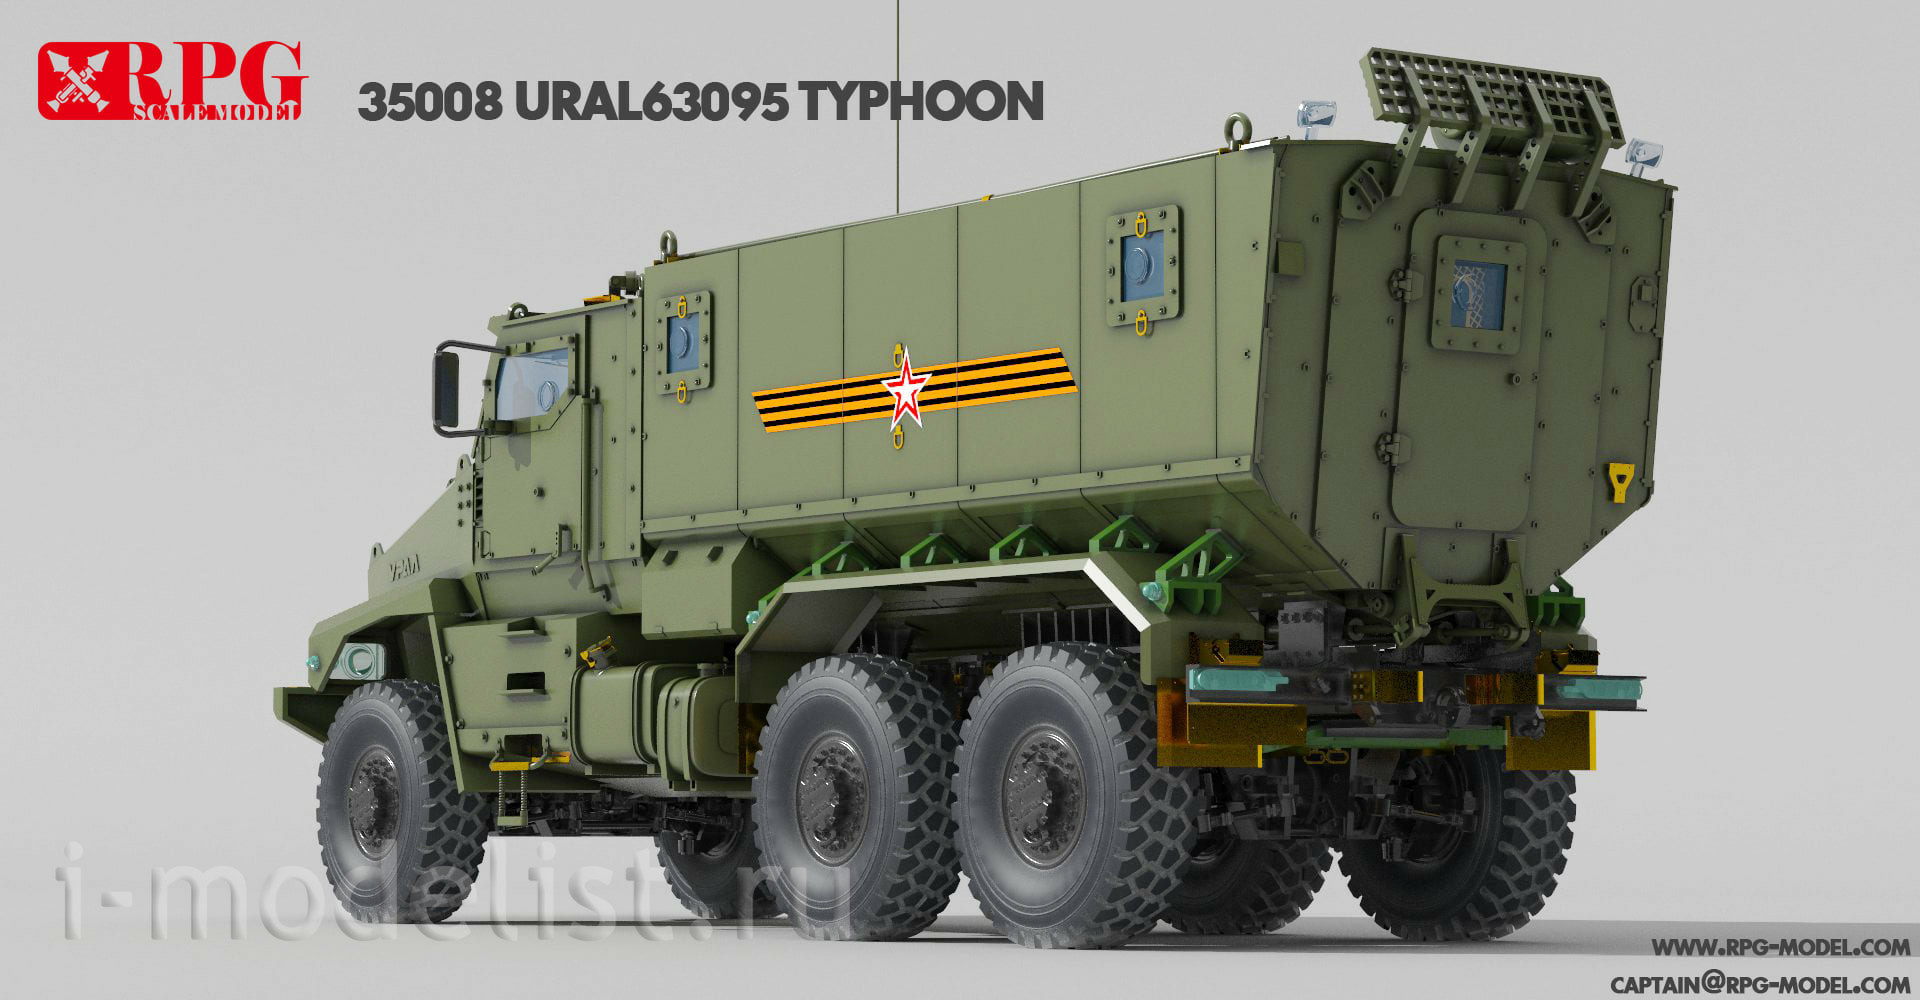 35008 RPG-MODEL 1/35 Armored car U-63095 TYPHOON-U